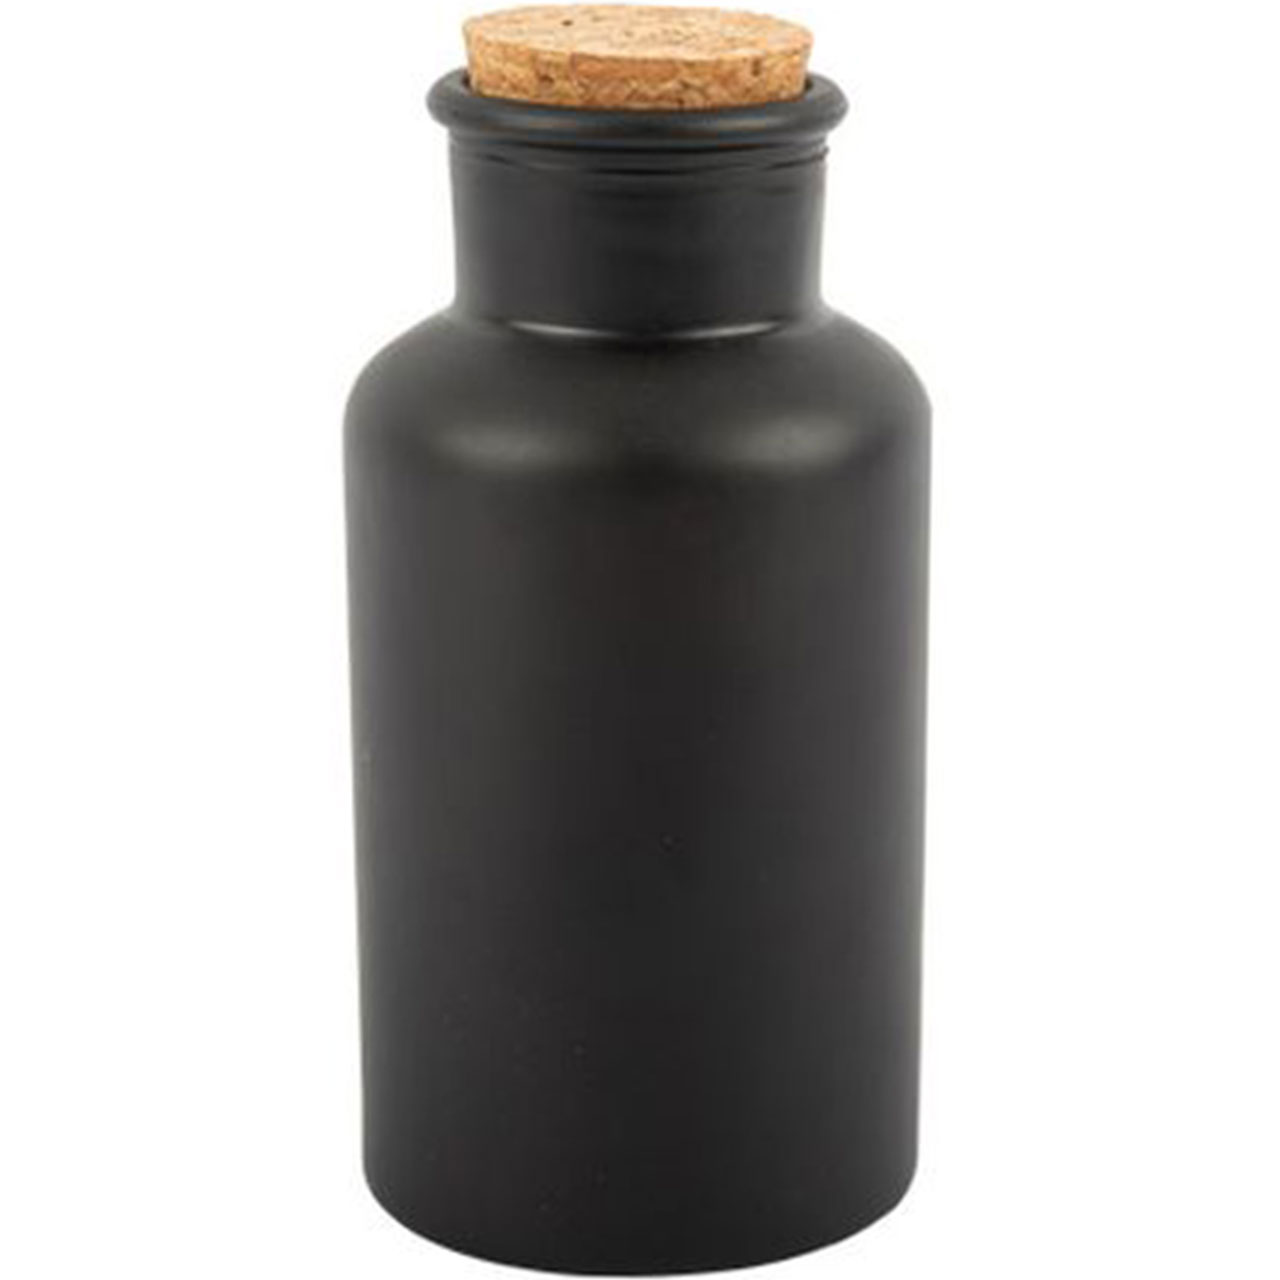 Apothecary Bottle - Black (500ml)